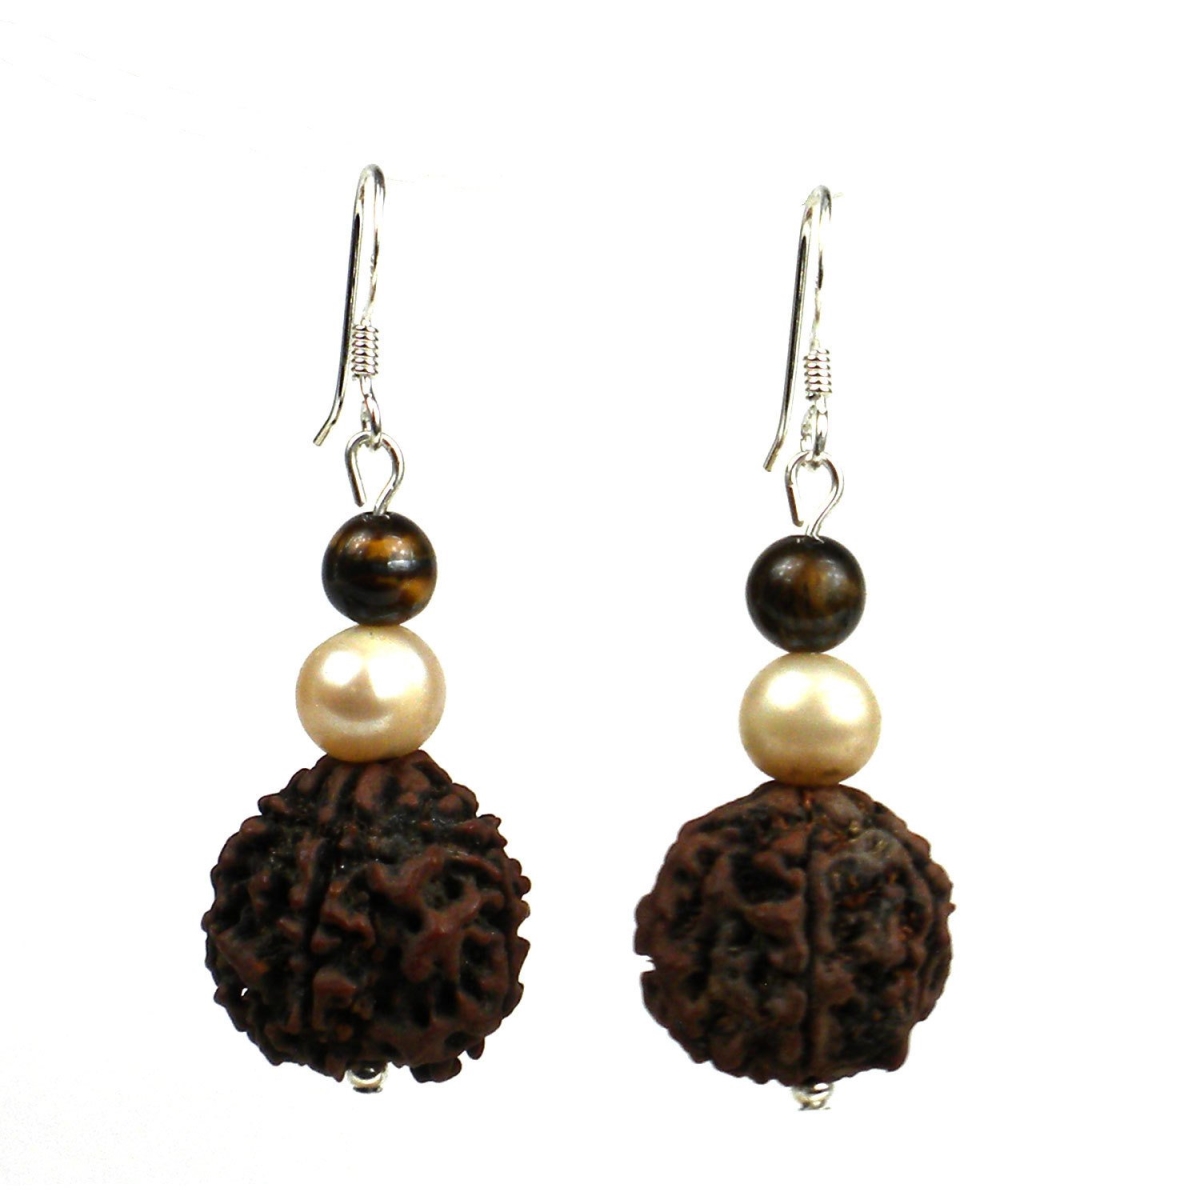 Glg14339-204174 Handmade & Fair Trade Rudraksha & Pearl Earrings